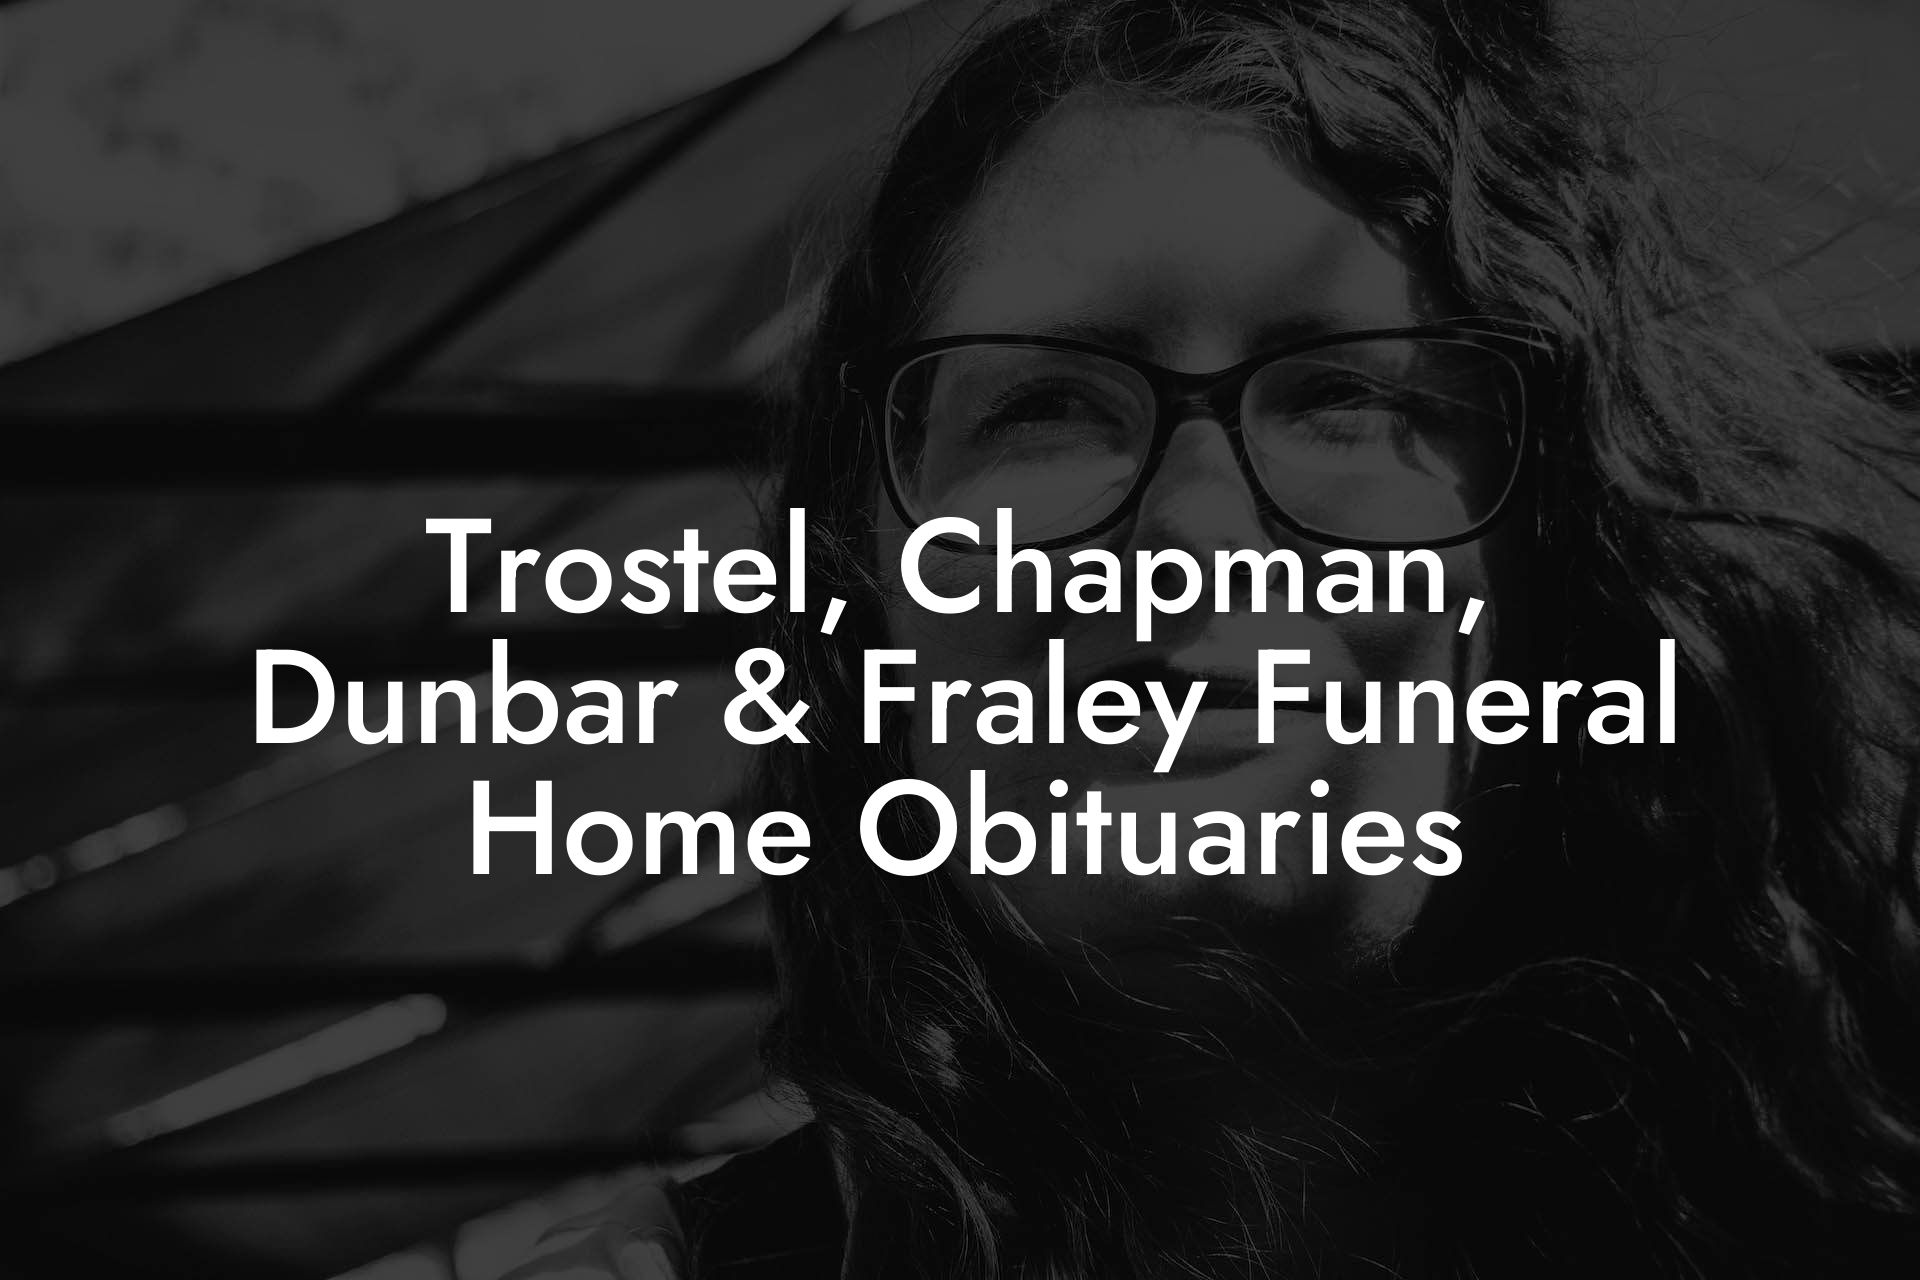 Trostel, Chapman, Dunbar & Fraley Funeral Home Obituaries